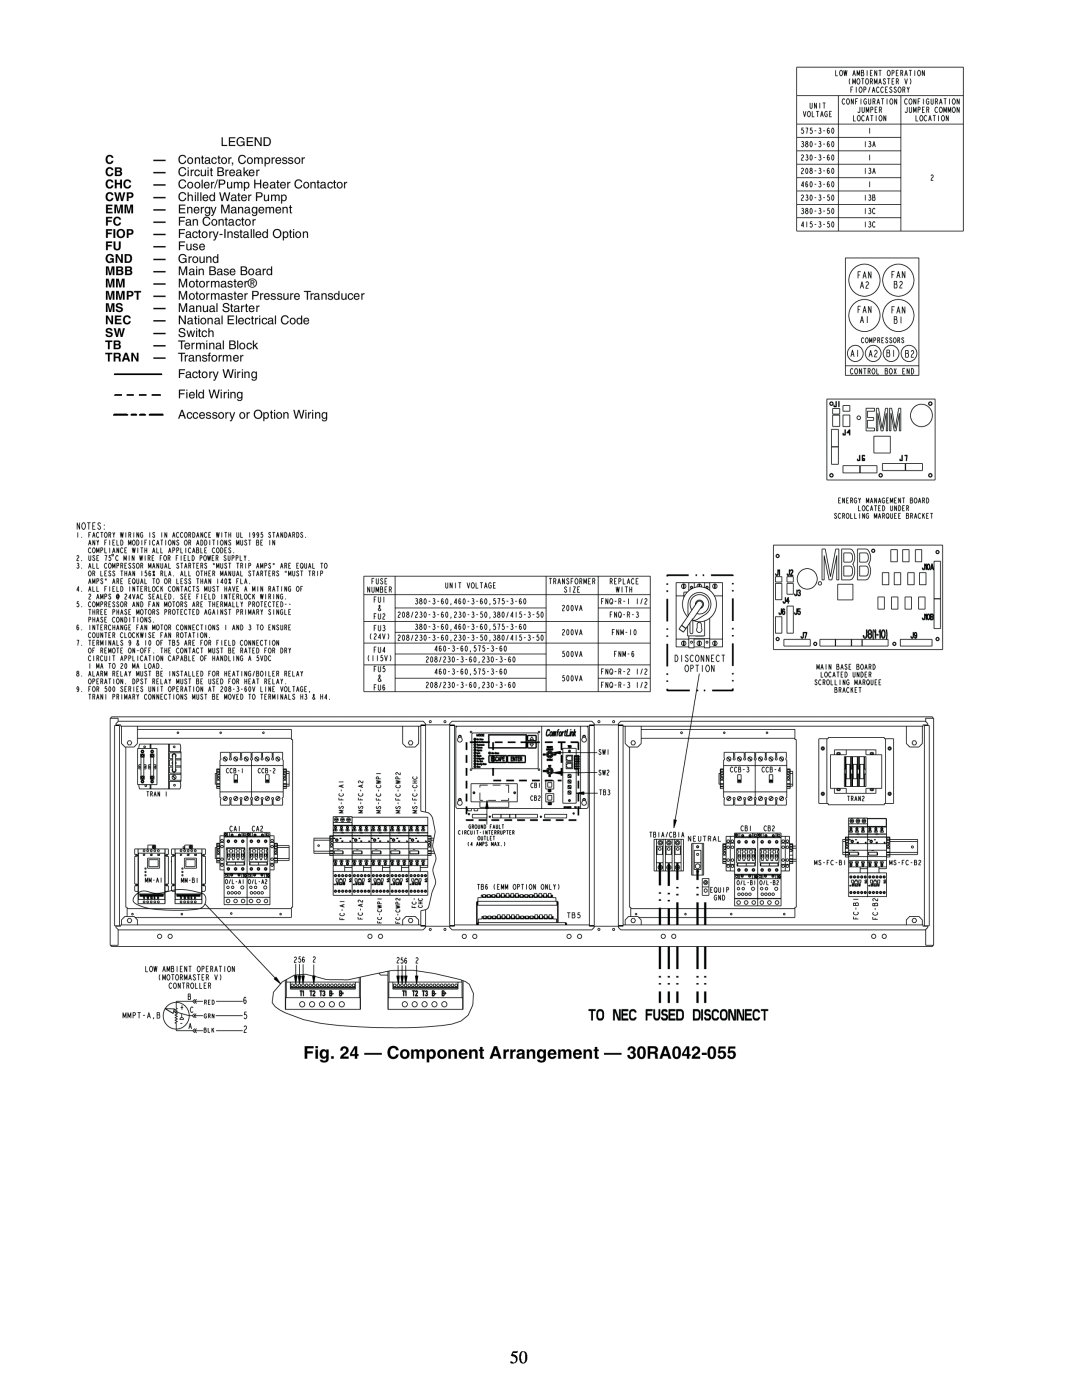 Sterling 30RA010-055 manual Component Arrangement — 30RA042-055, FU — Fuse GND — Ground 